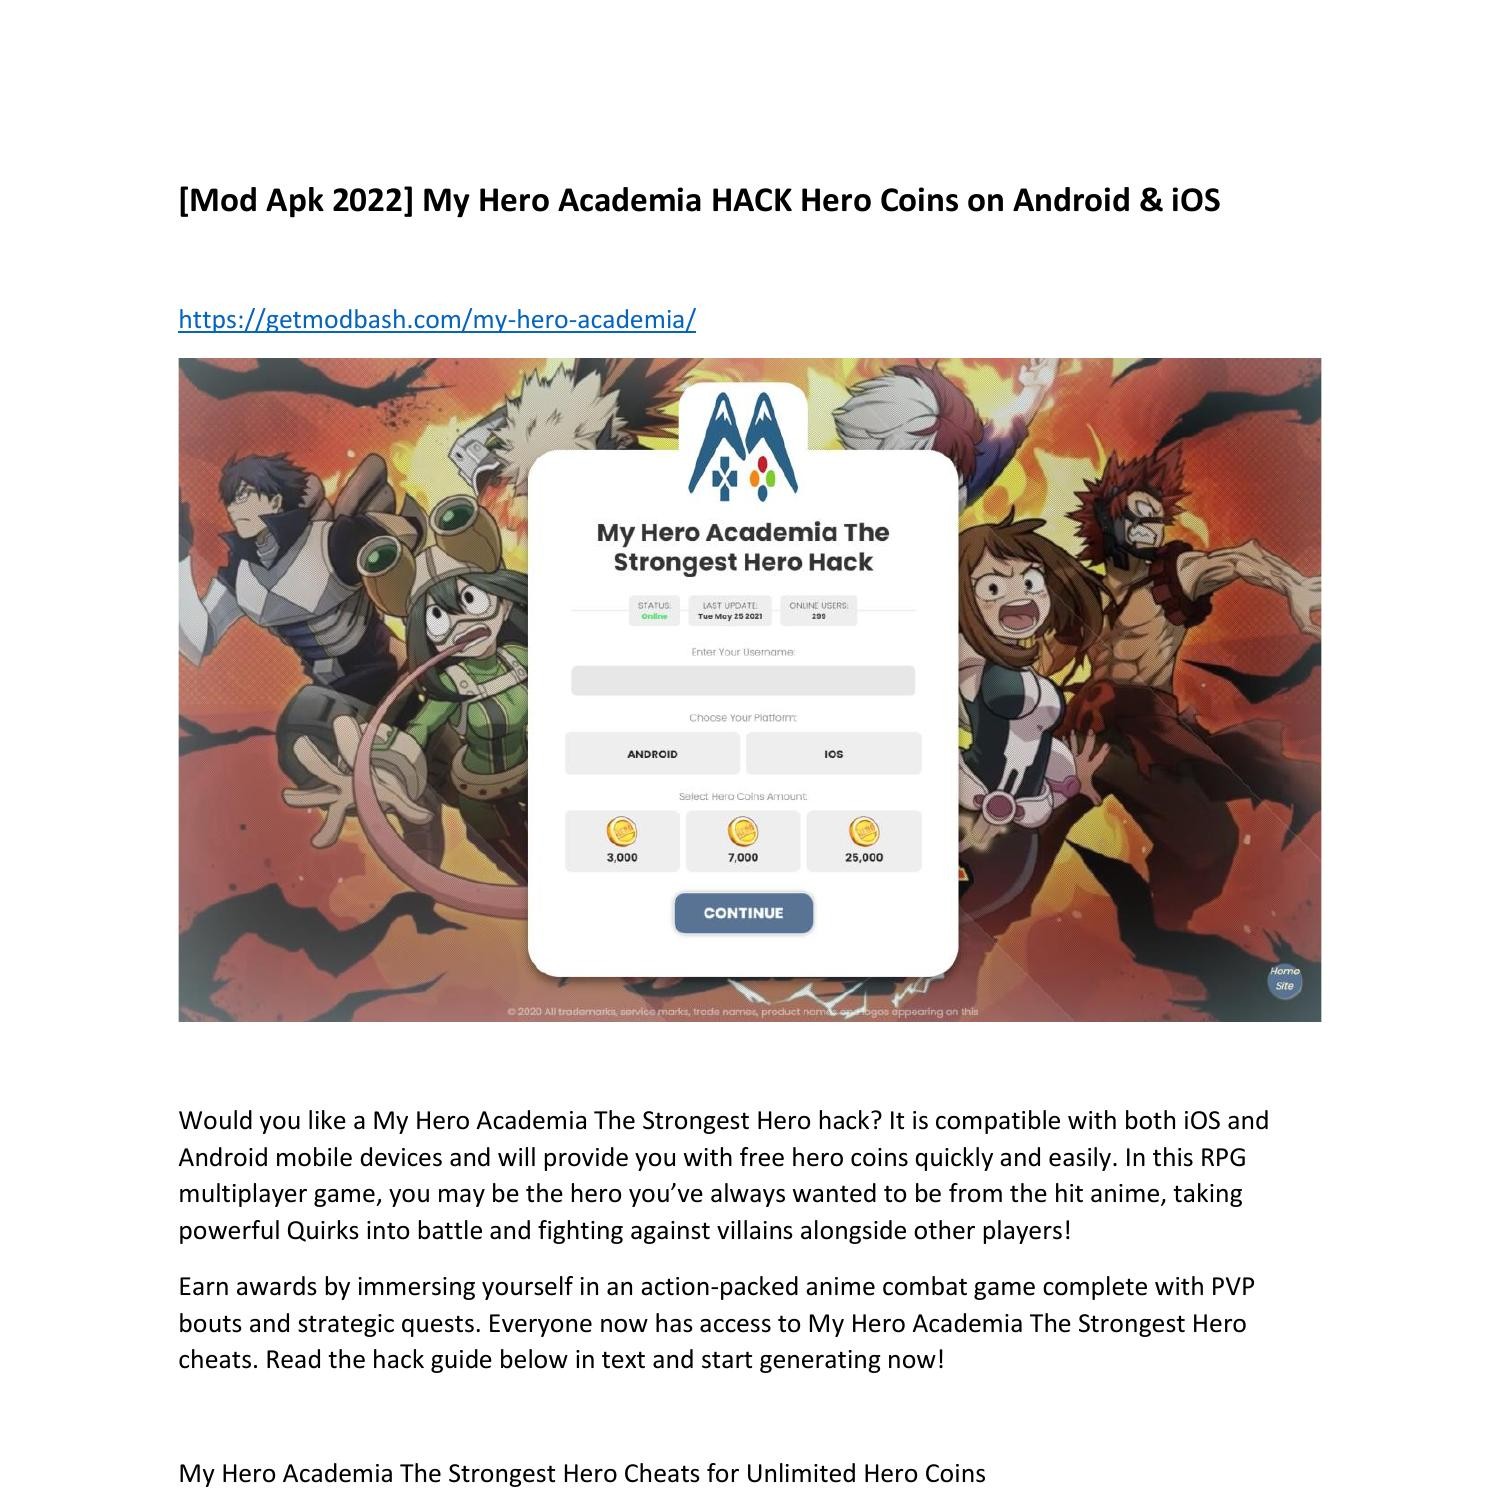 Mod Apk 2022] My Hero Academia HACK Hero Coins on Android & iOS.pdf